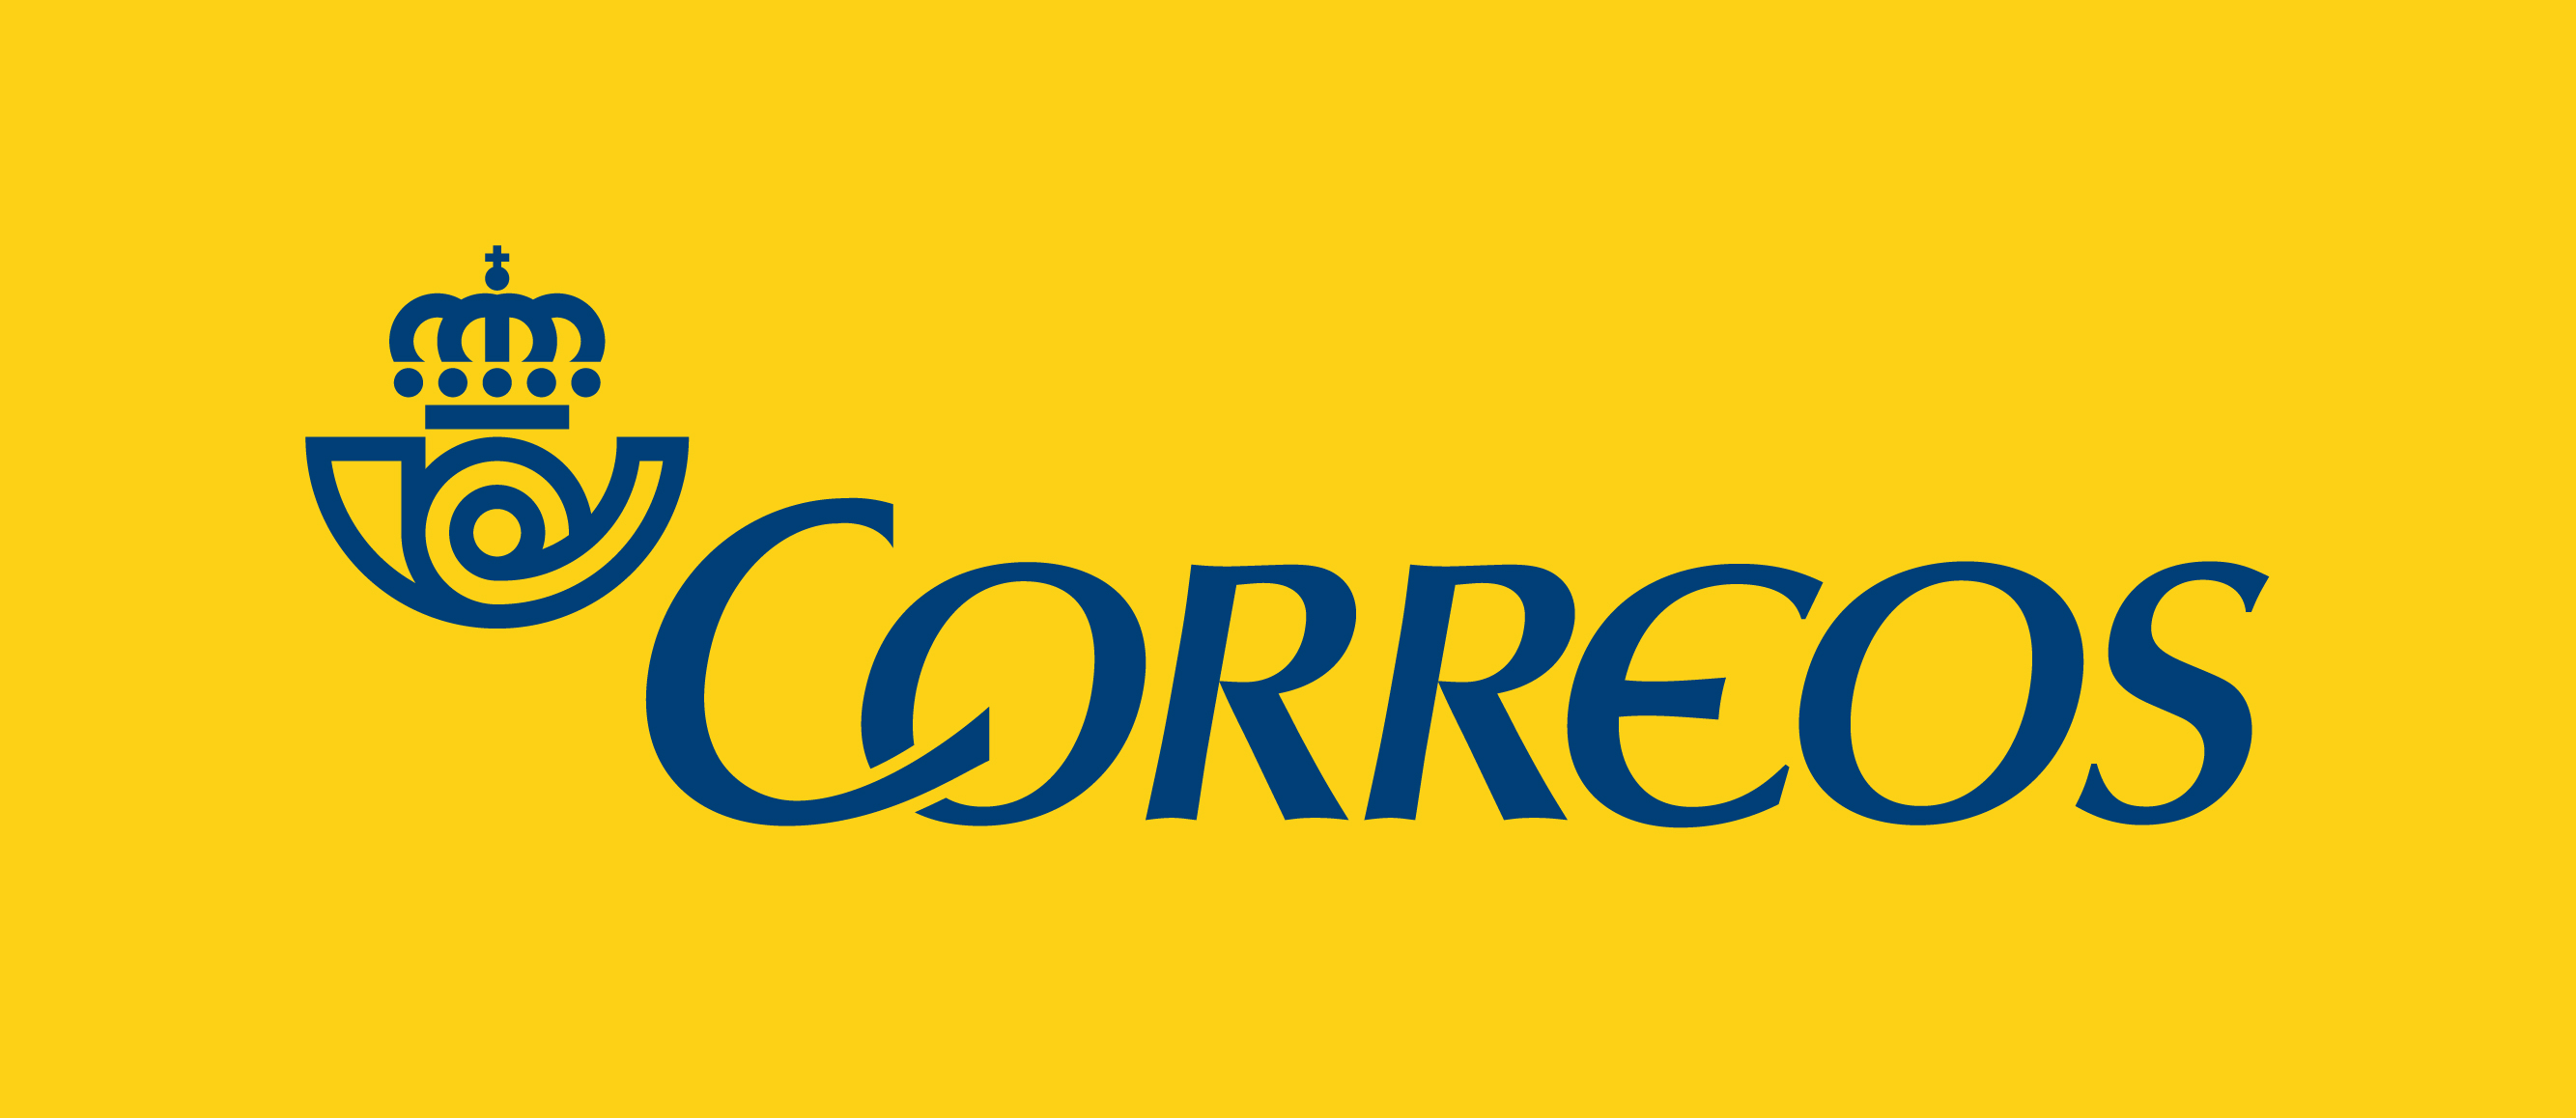 correos-logotipo-horizontal_0